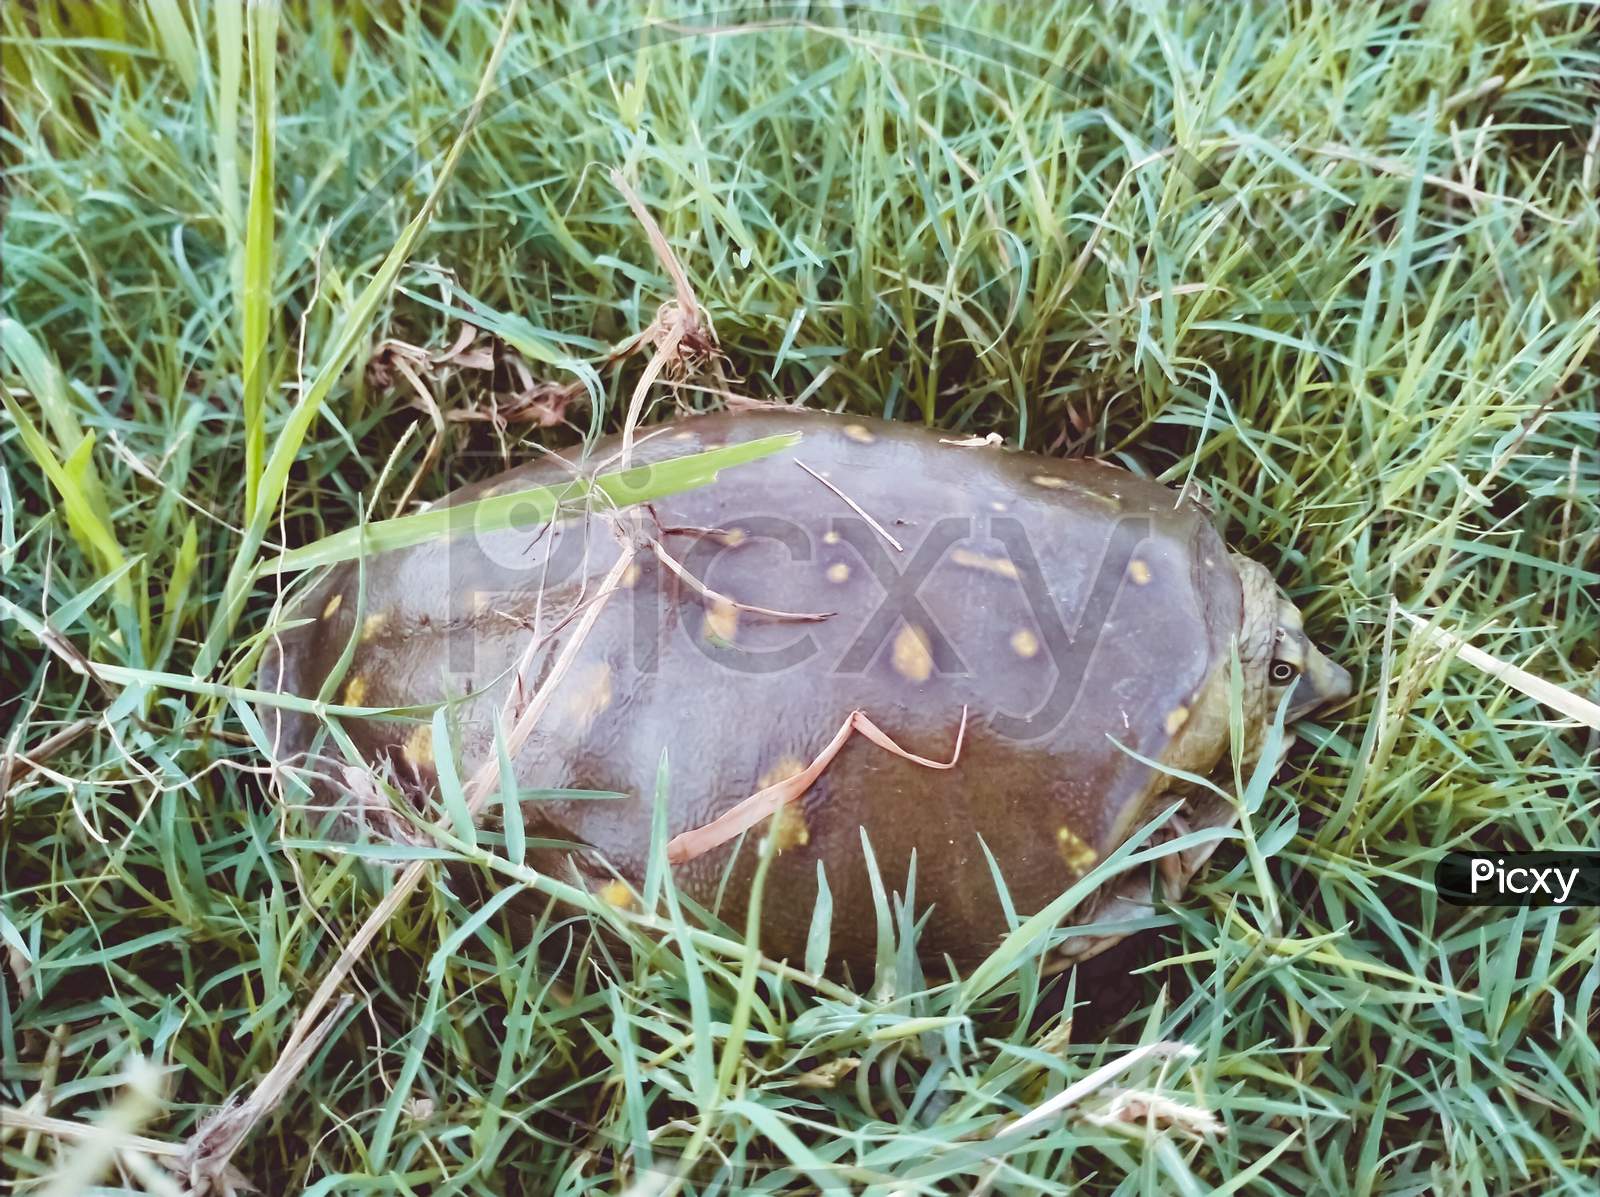 A tortoise hid itself